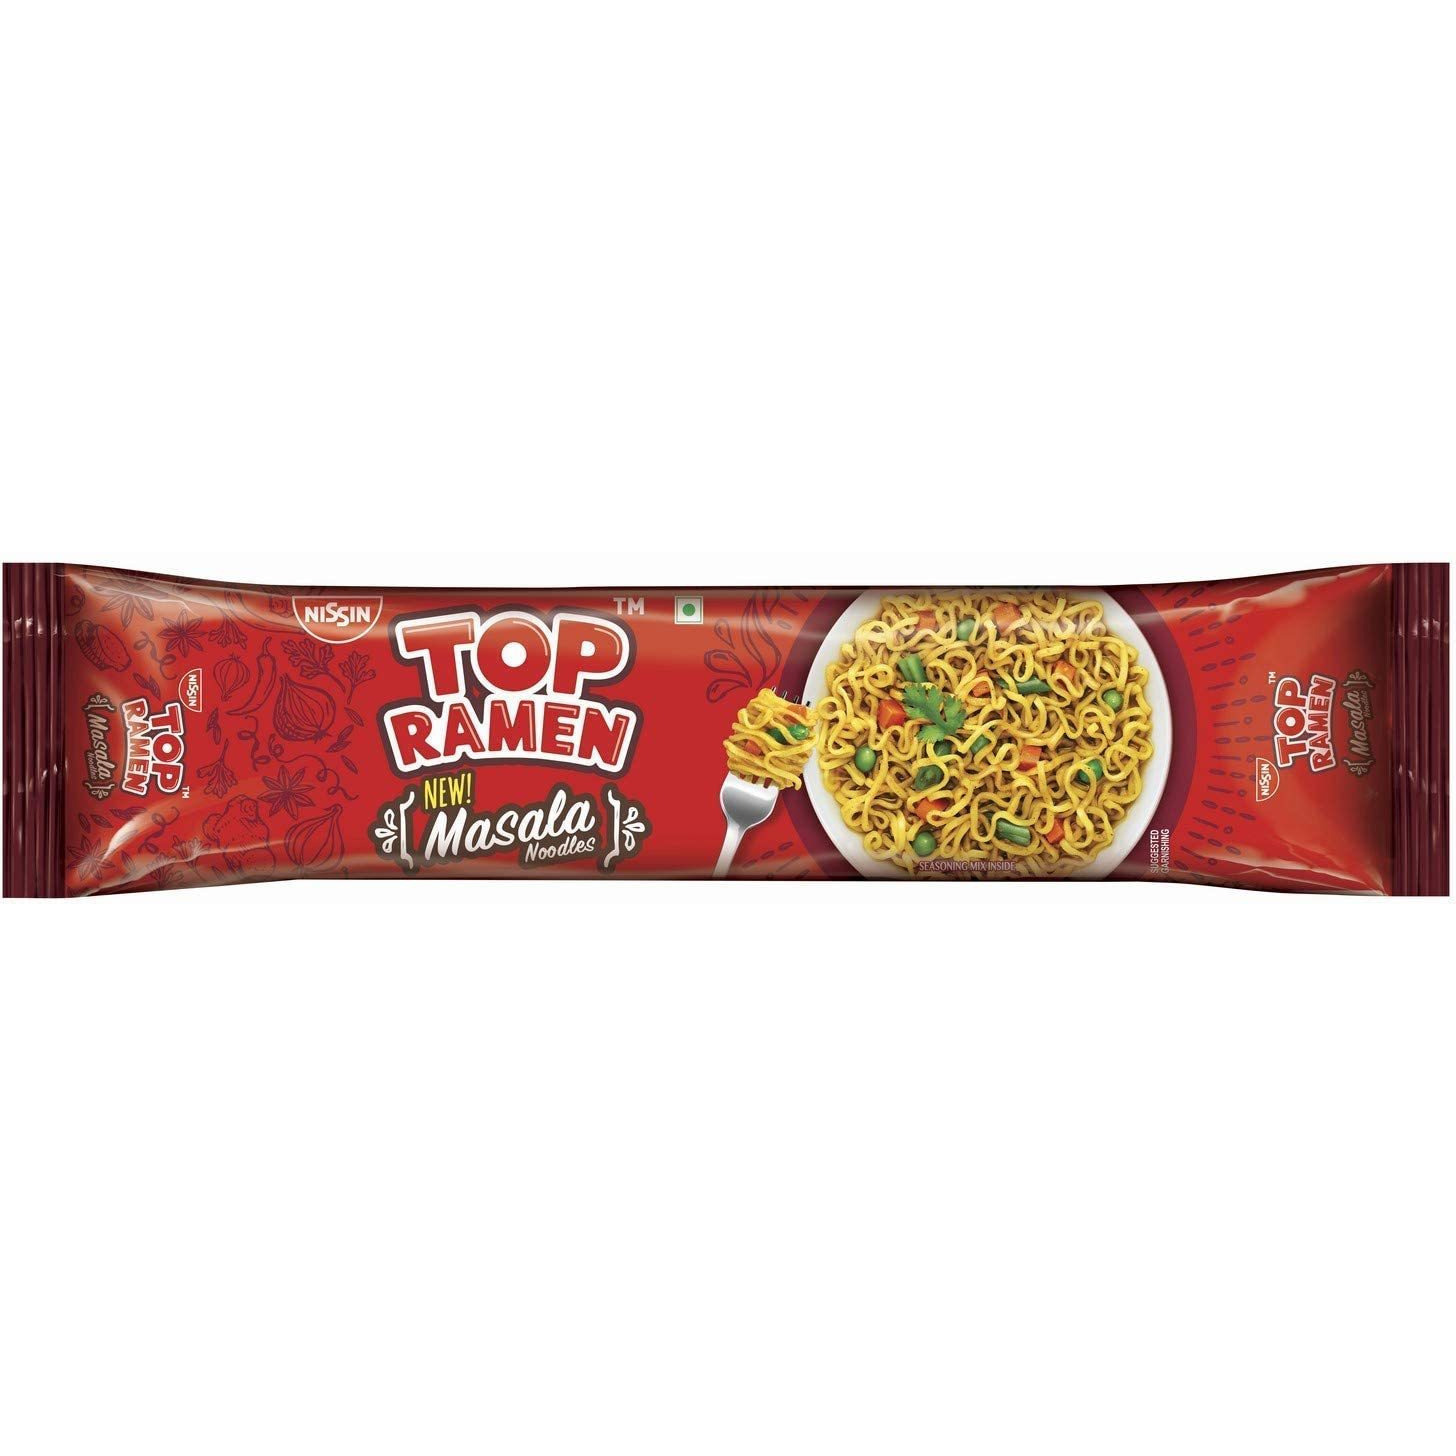 Pack of 4 - Top Ramen Masala Noodles - 480 Gm (16.93 Oz)